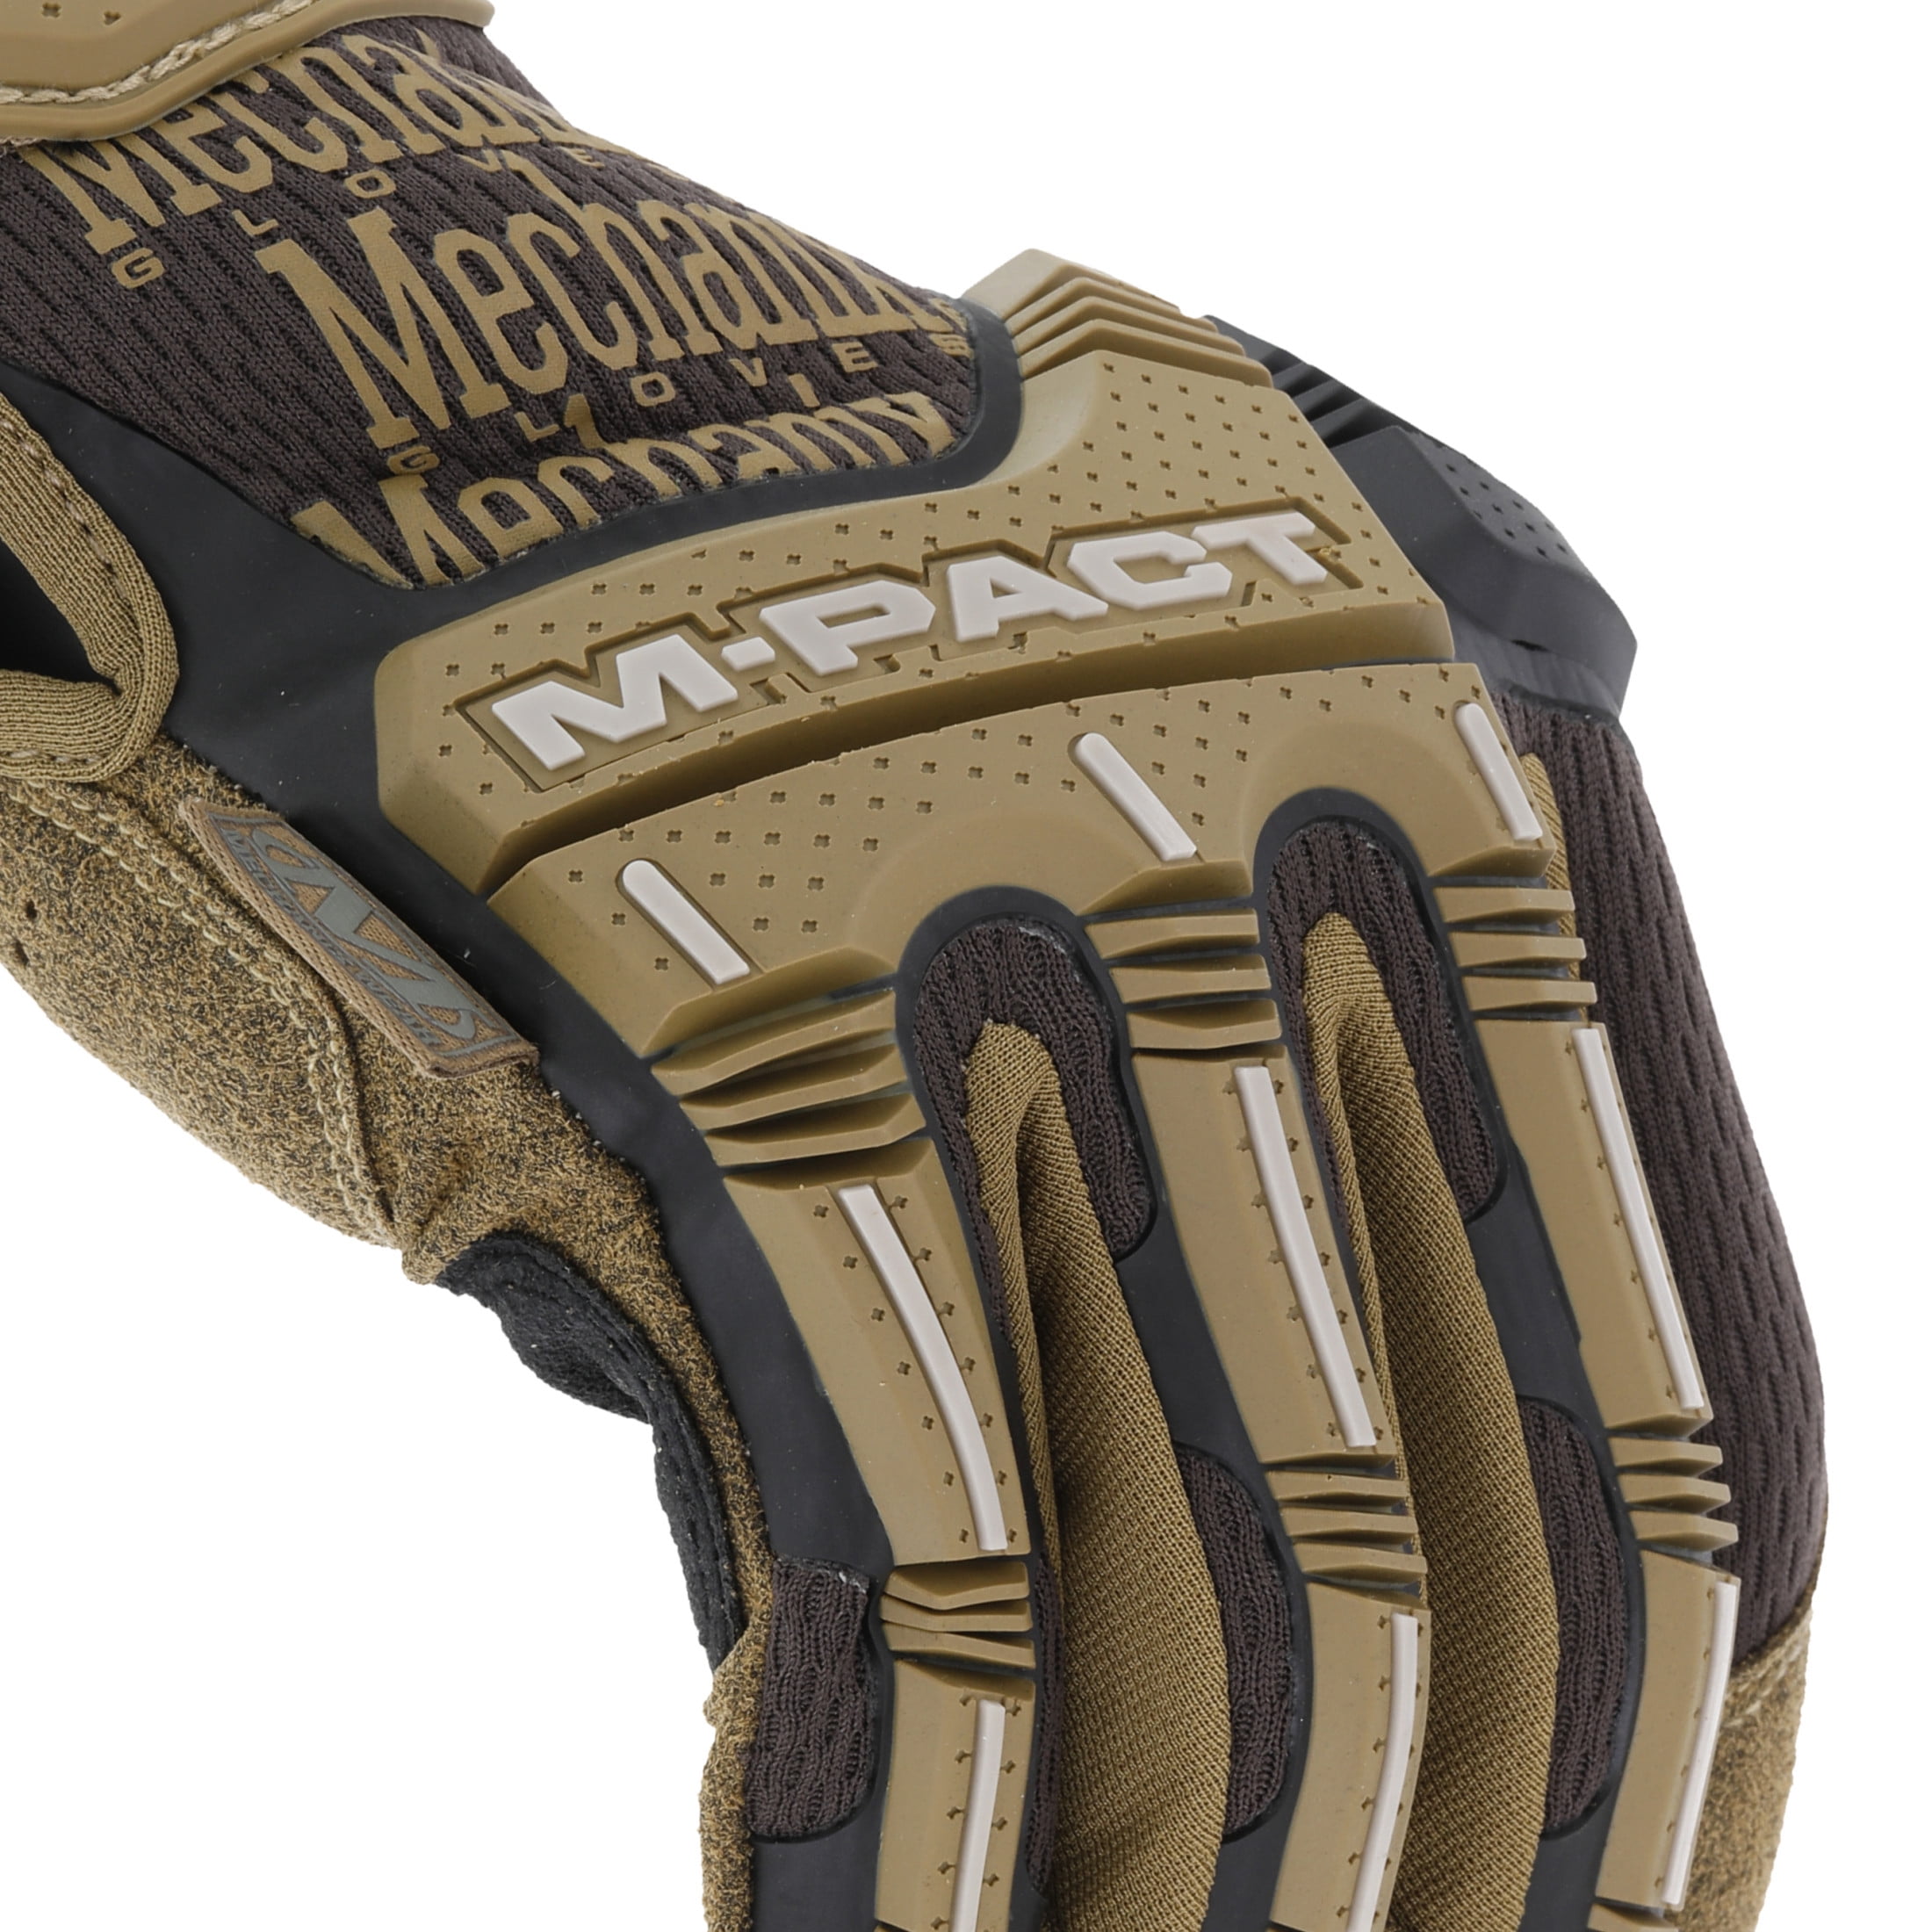 Mpact Impact Protection Glove Multicam Size 10 Large Mechanix Wear for sale online 